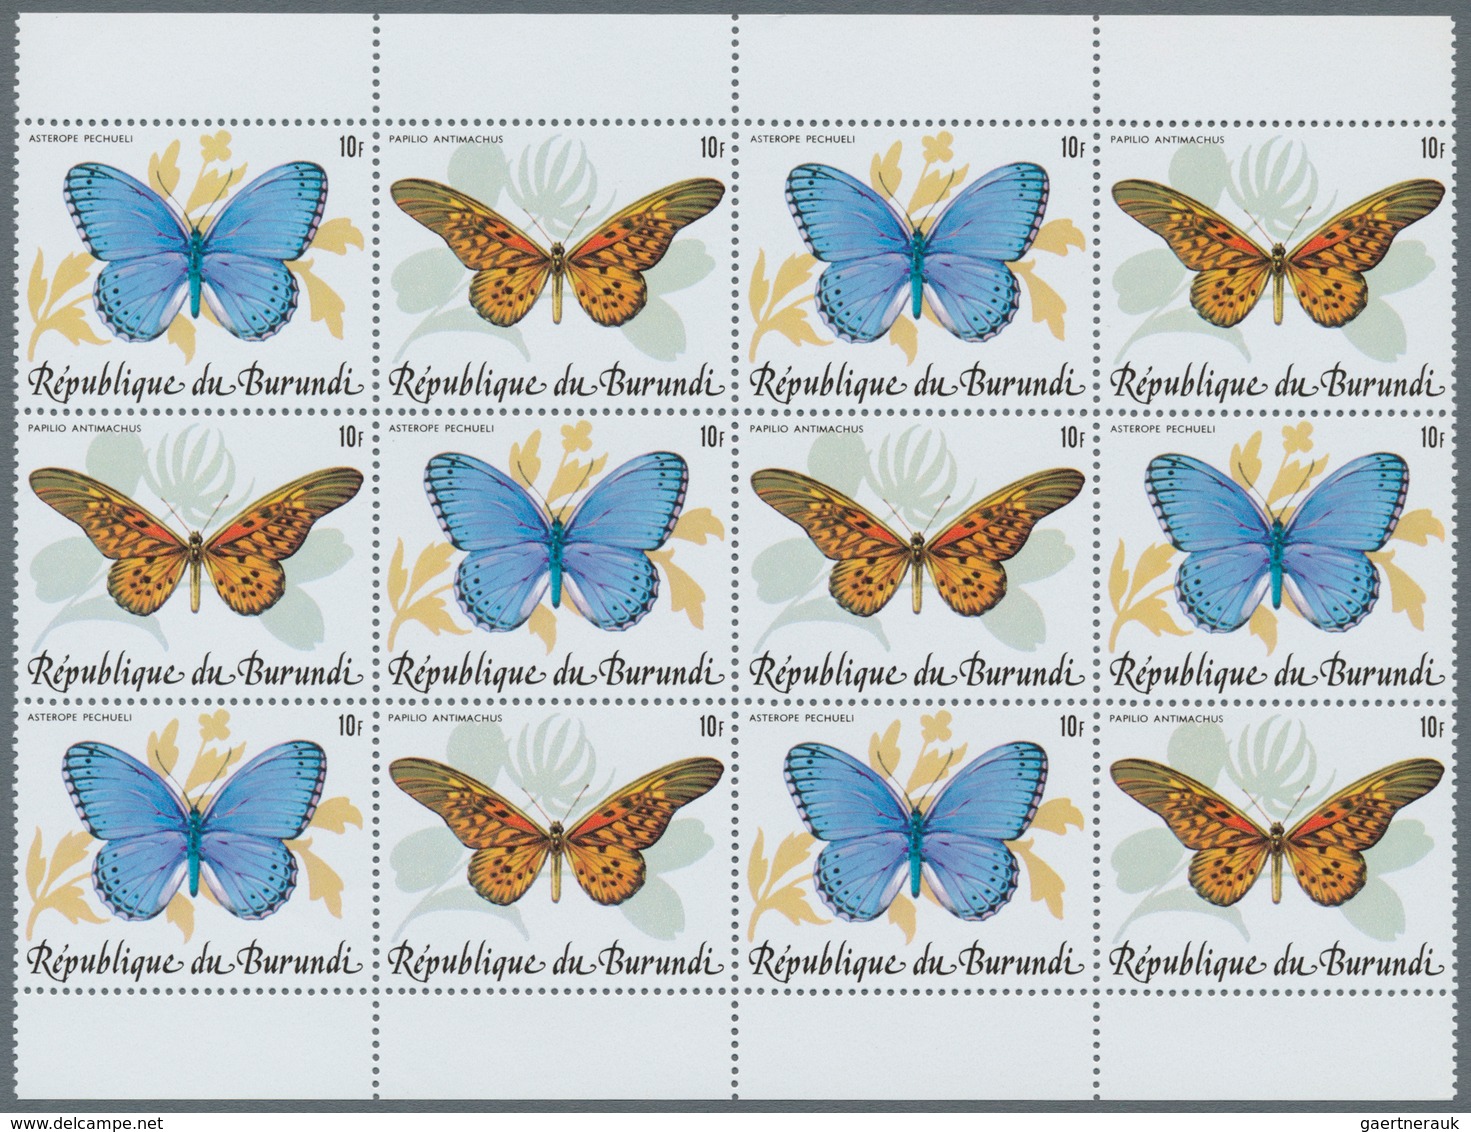 Burundi: 1984, Butterflies complete set of 10 in se-tenant pairs in blocks of 12 (six sets), mint ne